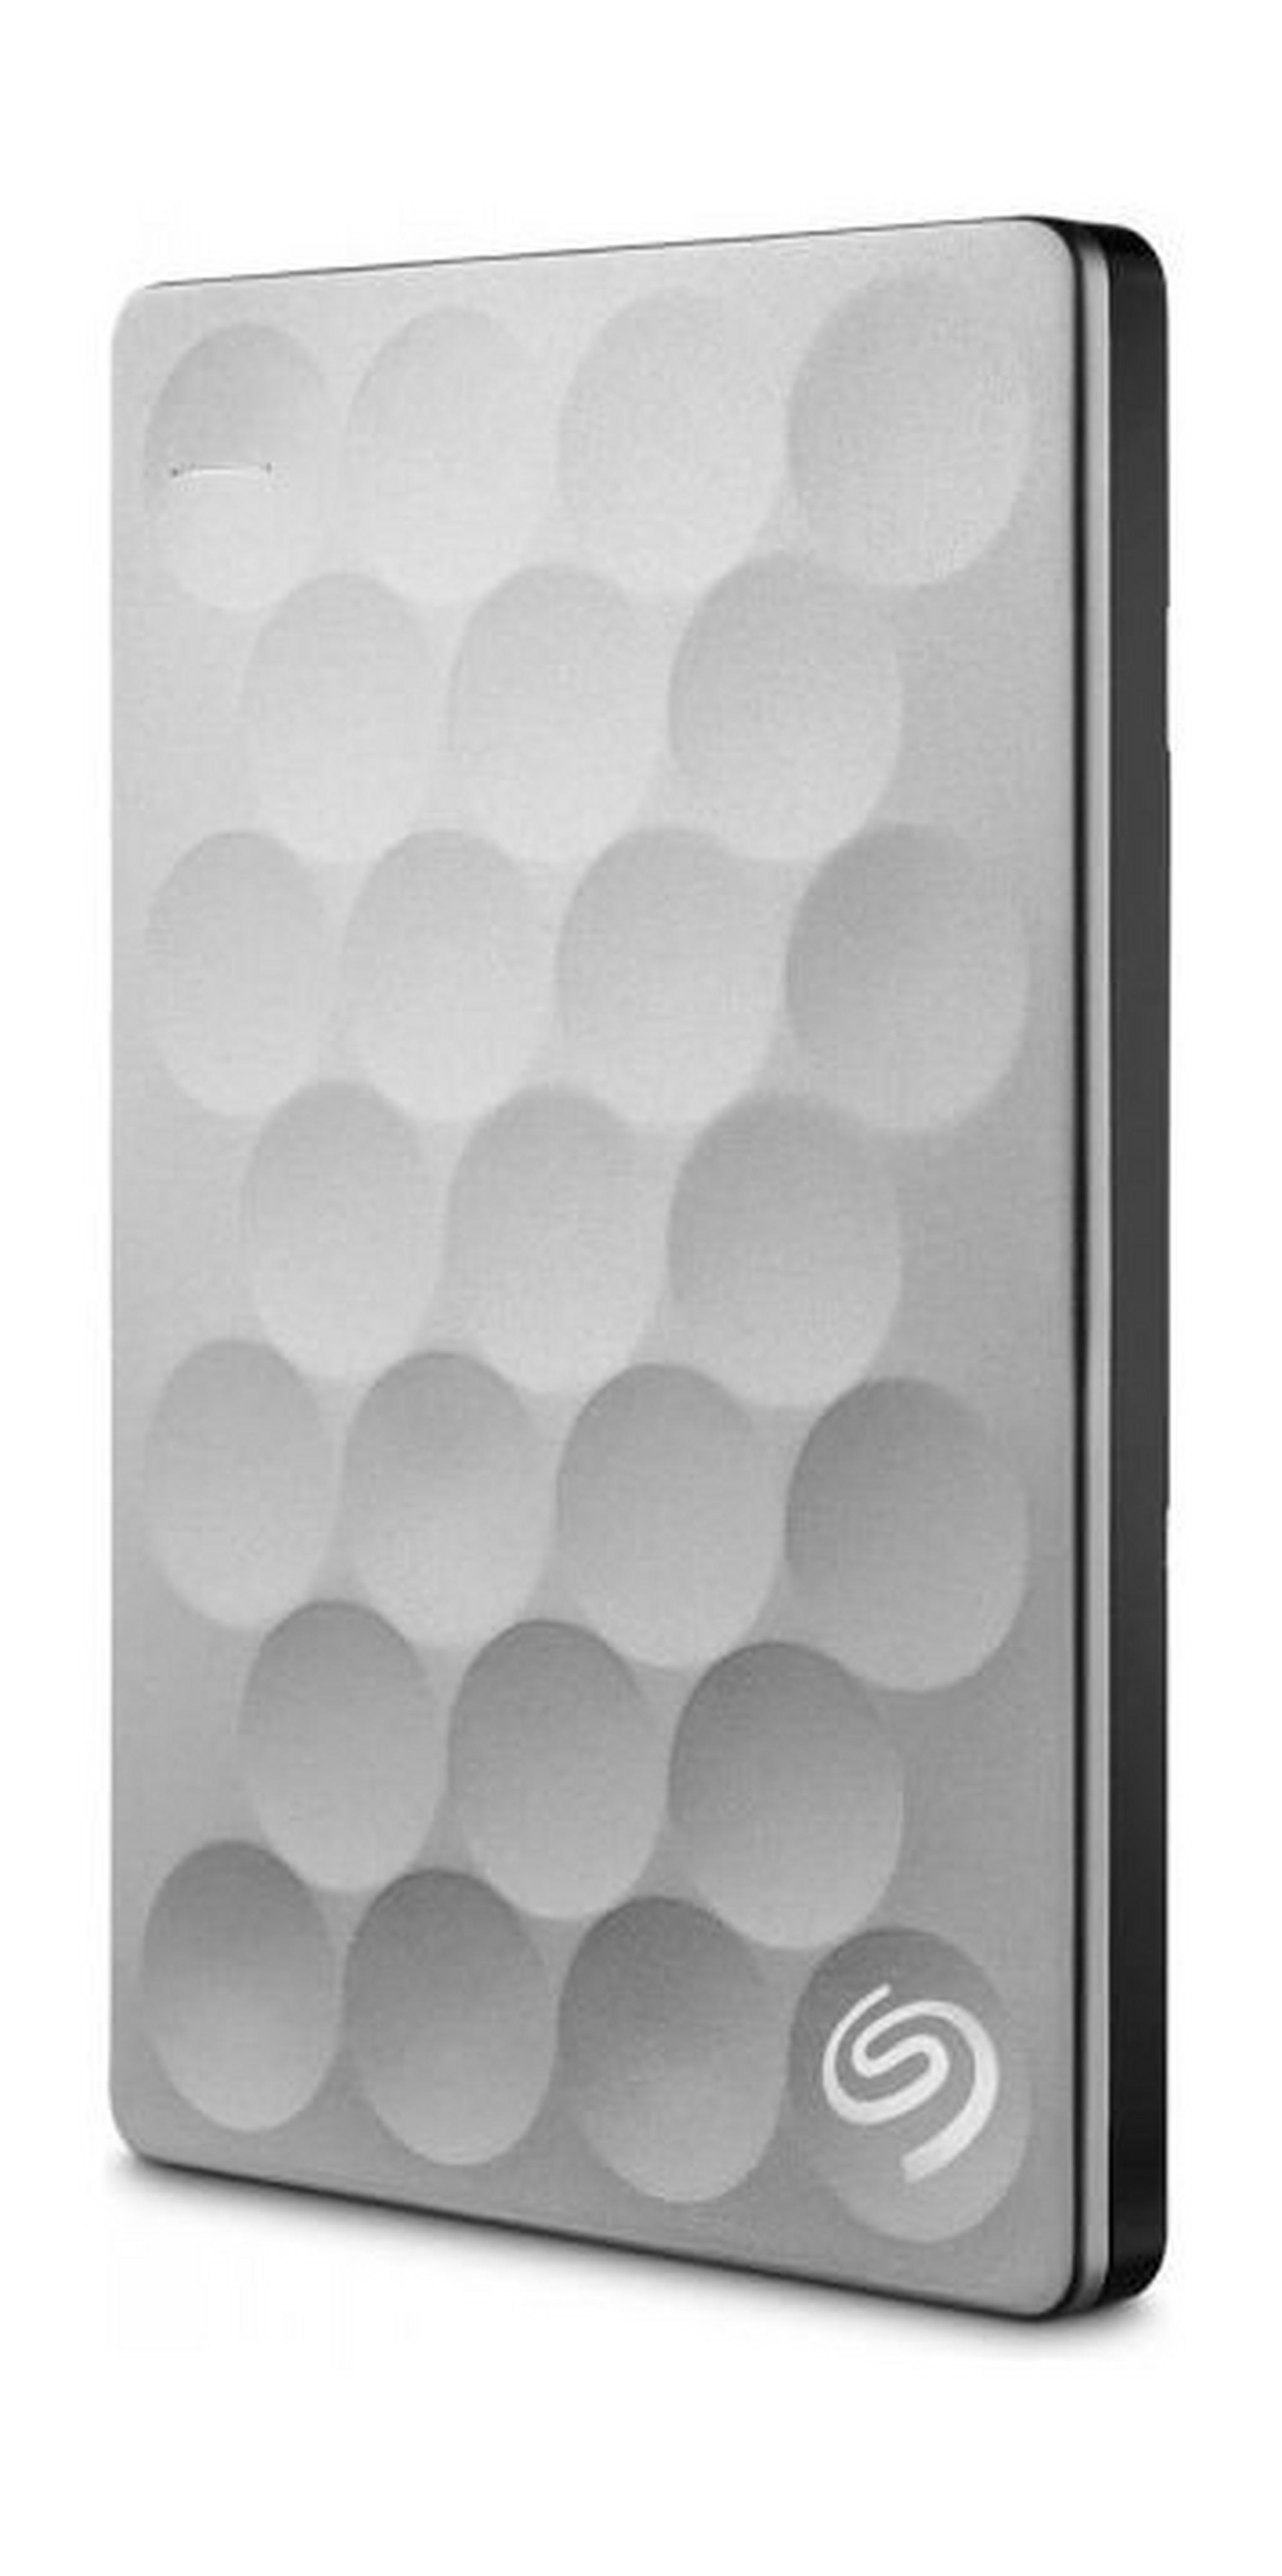 Seagate Backup Plus Ultra Slim 1TB External Hard Drive (STEH1000200) – Platinum